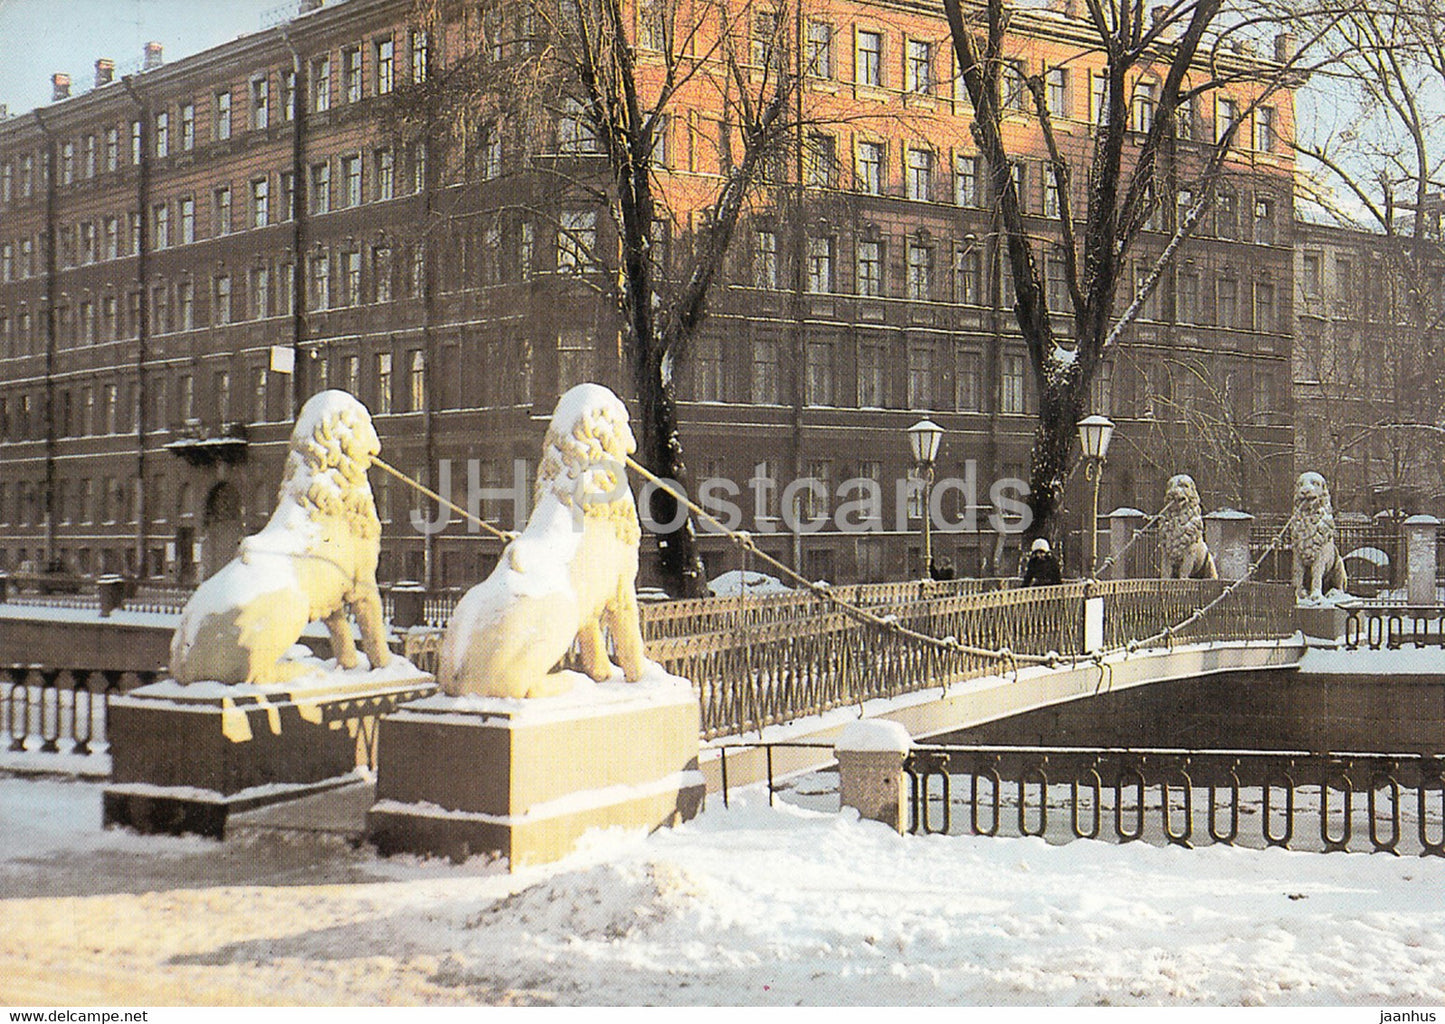 Leningrad - St Petersburg - Lion's Bridge - 1981 - Russia USSR - used - JH Postcards